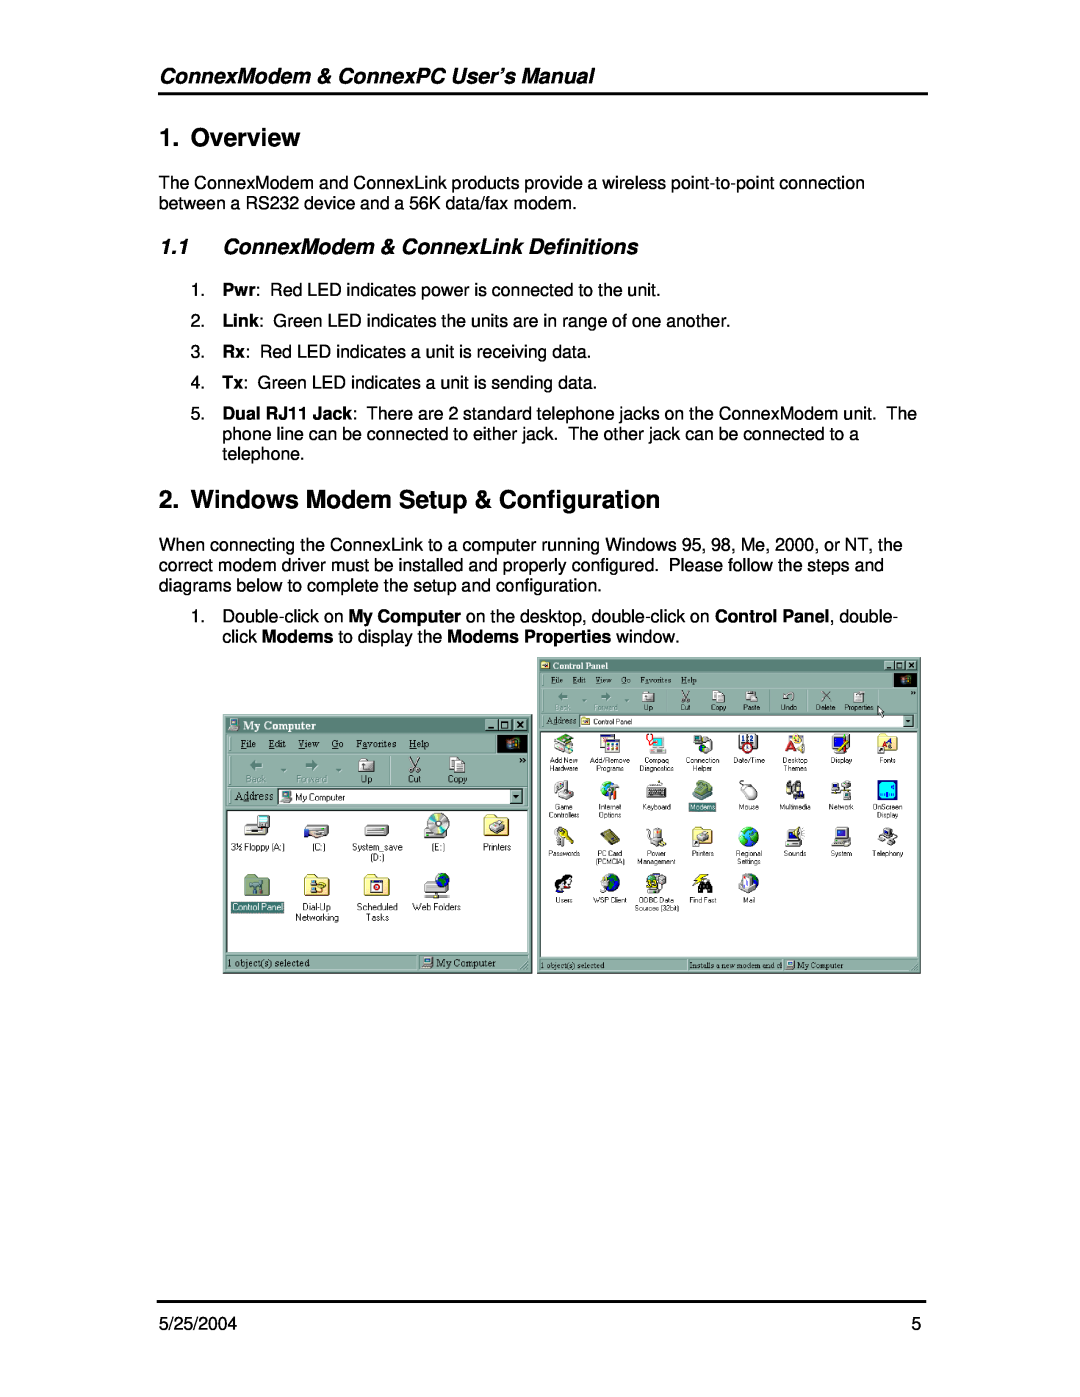 AeroComm ConnexModem Version 2.0 Overview, Windows Modem Setup & Configuration, ConnexModem & ConnexPC User’s Manual 